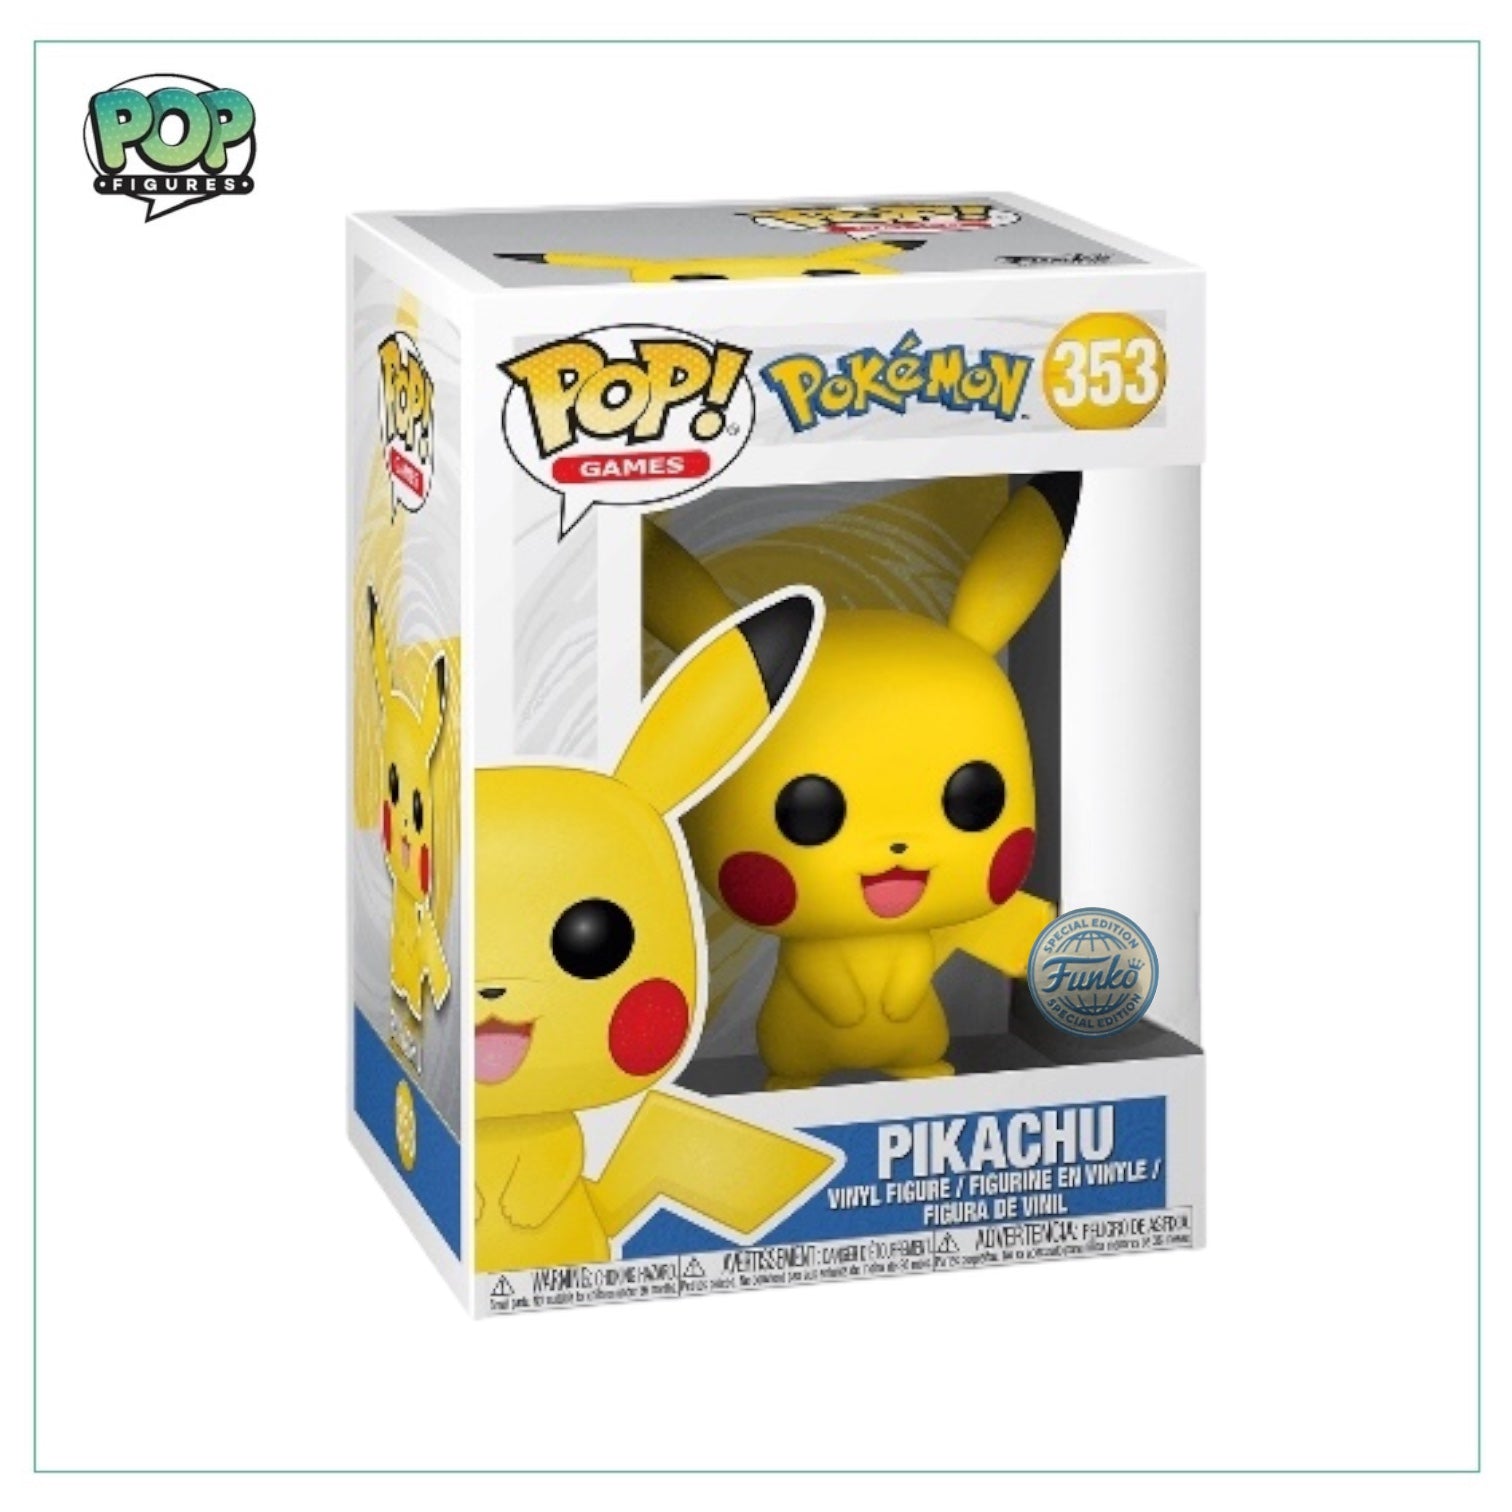 Pikachu #353 Funko Pop! - Pokémon - Special Edition